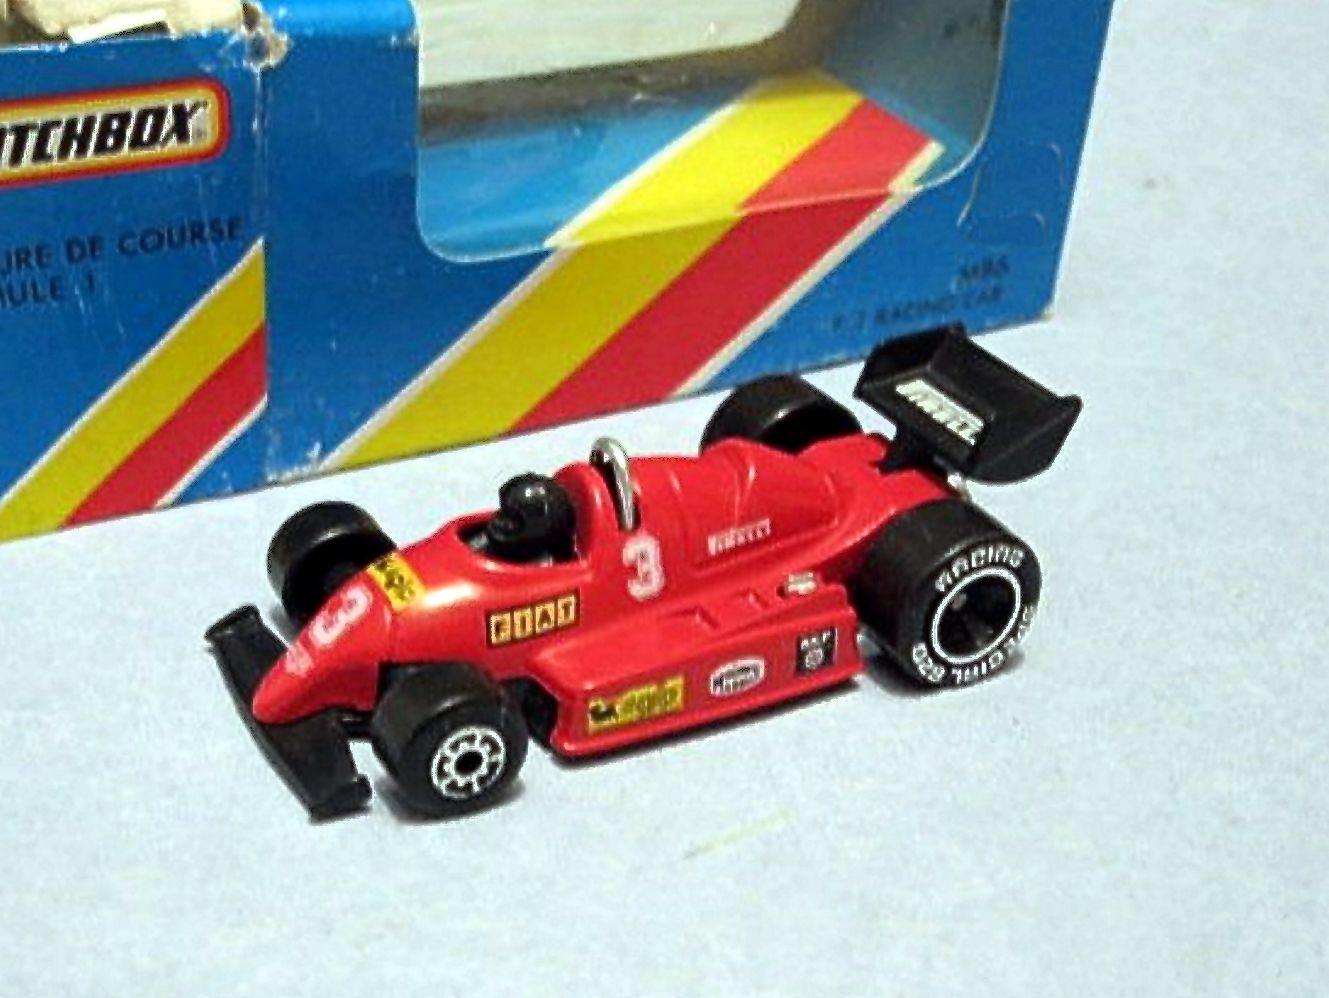 F 1 Racer | Matchbox Cars Wiki | Fandom